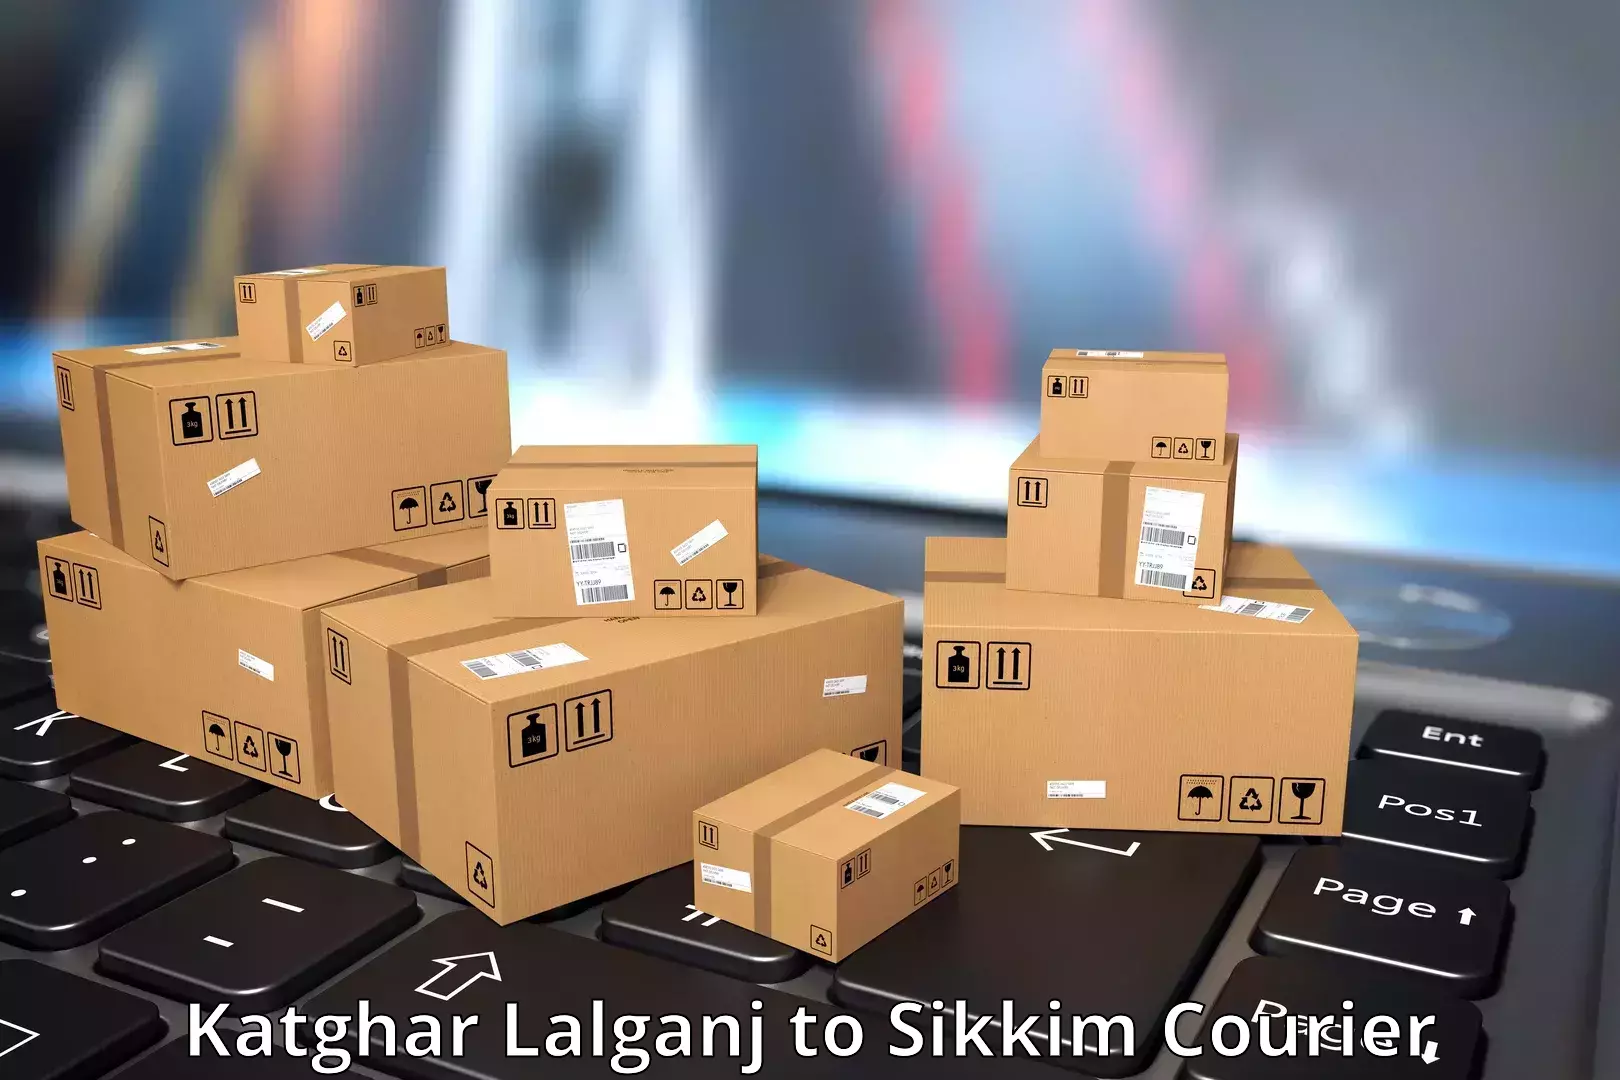 Reliable courier service in Katghar Lalganj to Namchi